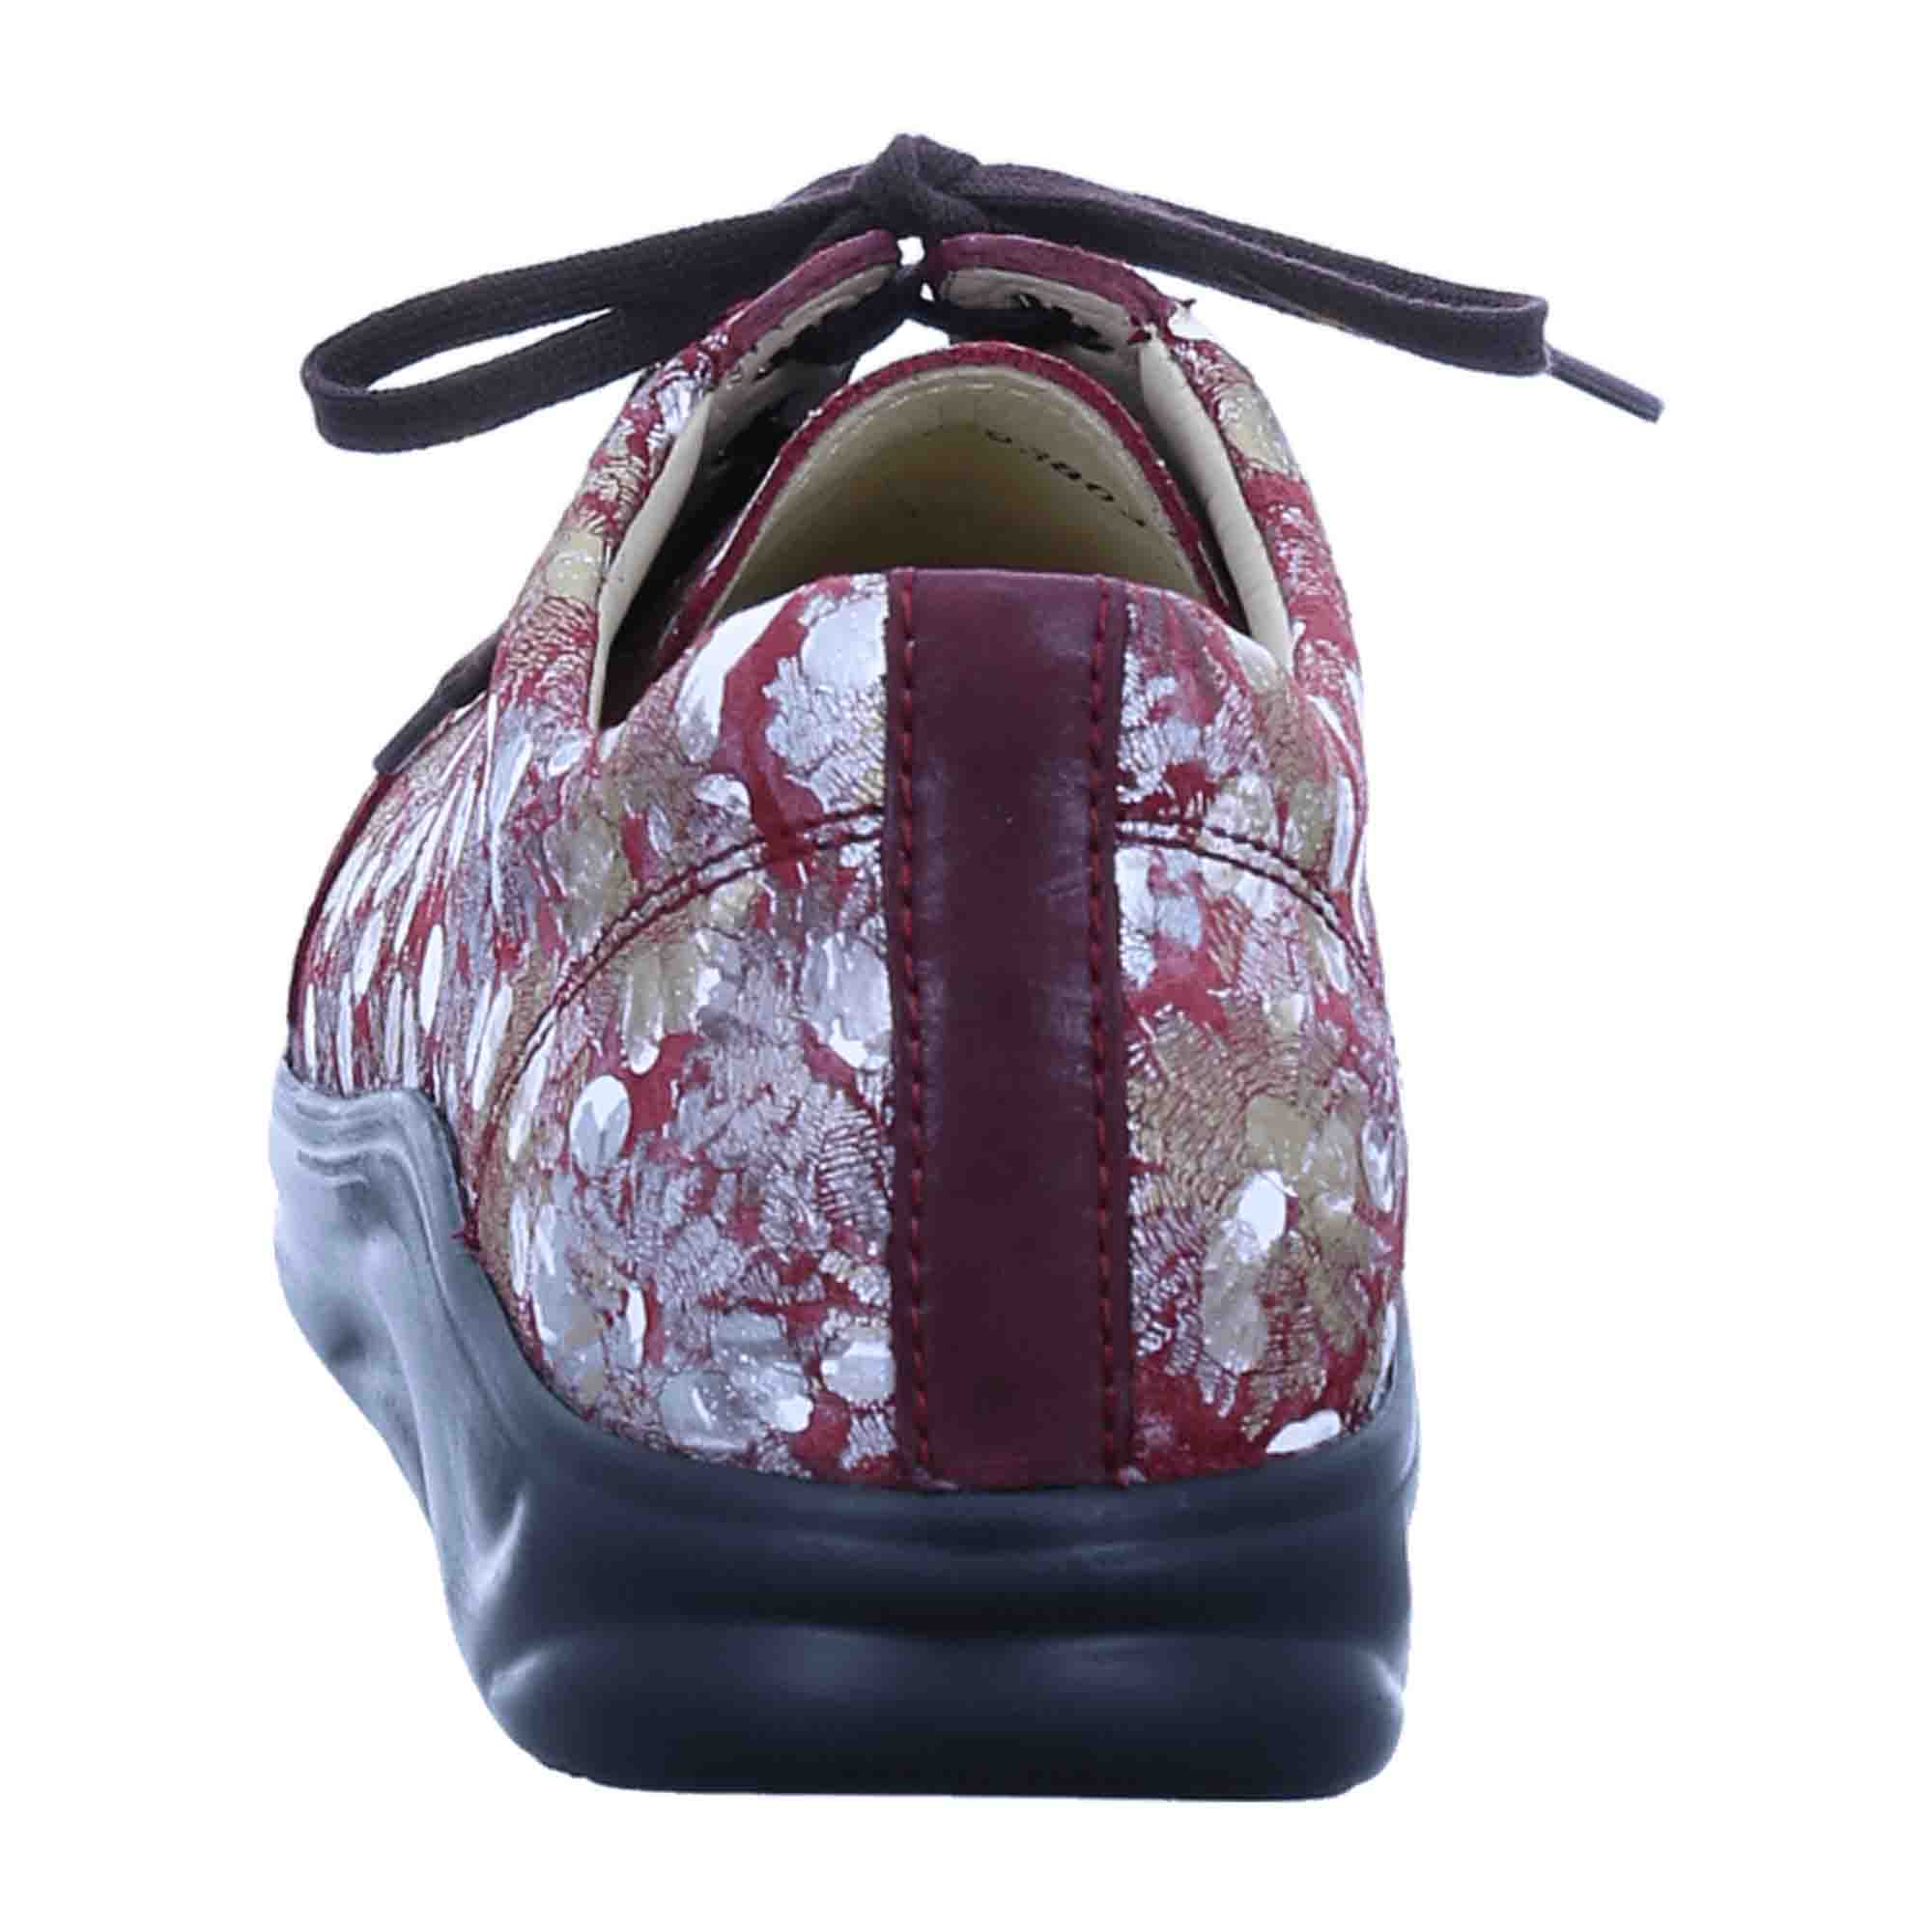 Finn Comfort Ikebukuro Women's Shoes - Vibrant Berry/Bordo Color Mix, Stylish and Comfortable